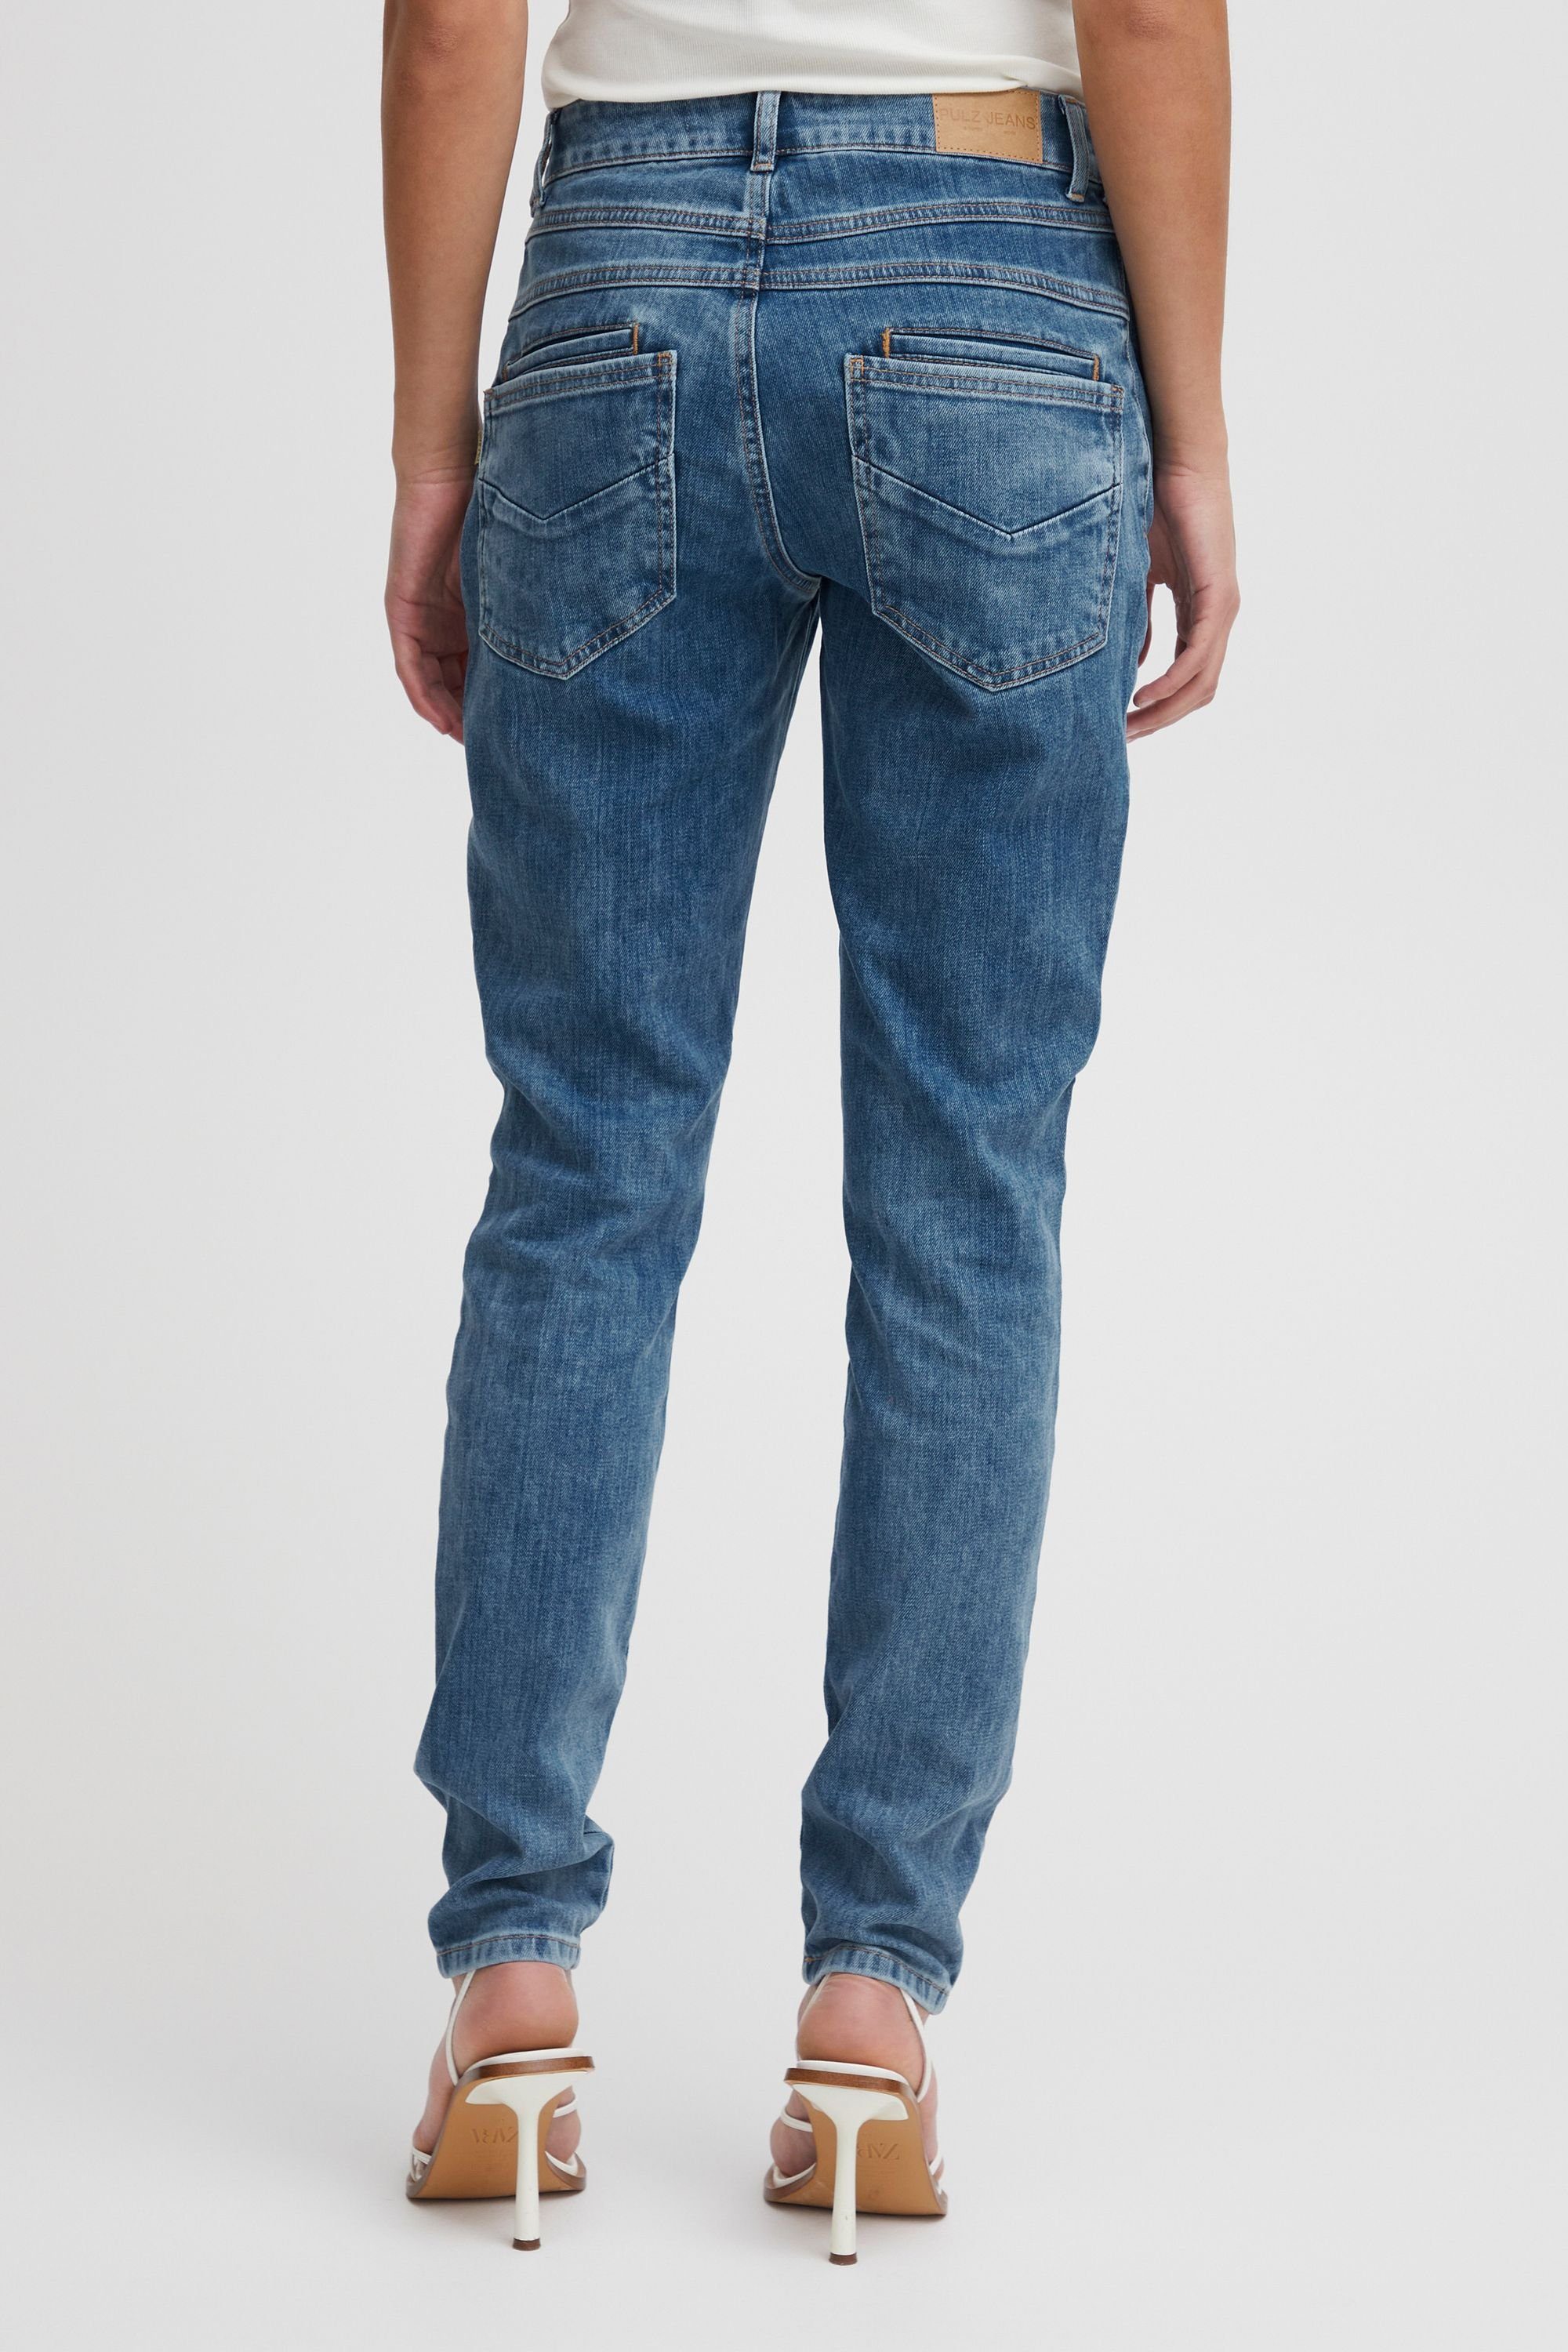 (200005) 5-Pocket-Jeans Jeans blue denim Leg Pulz Medium Jeans Skinny PZMELINA Loose